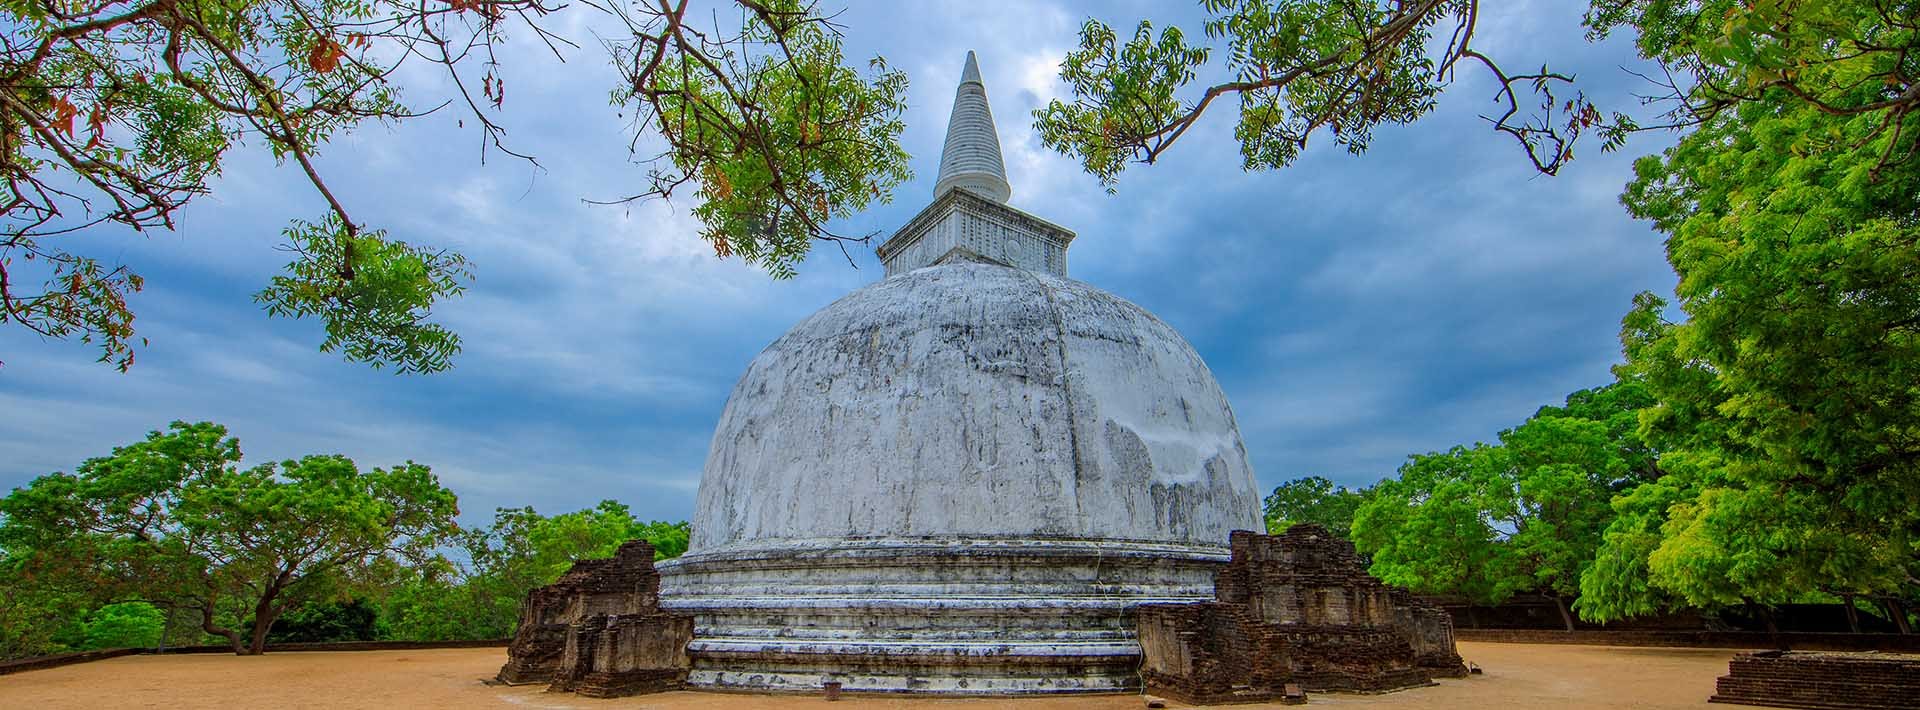 Majestic stupas! | Gateway to East